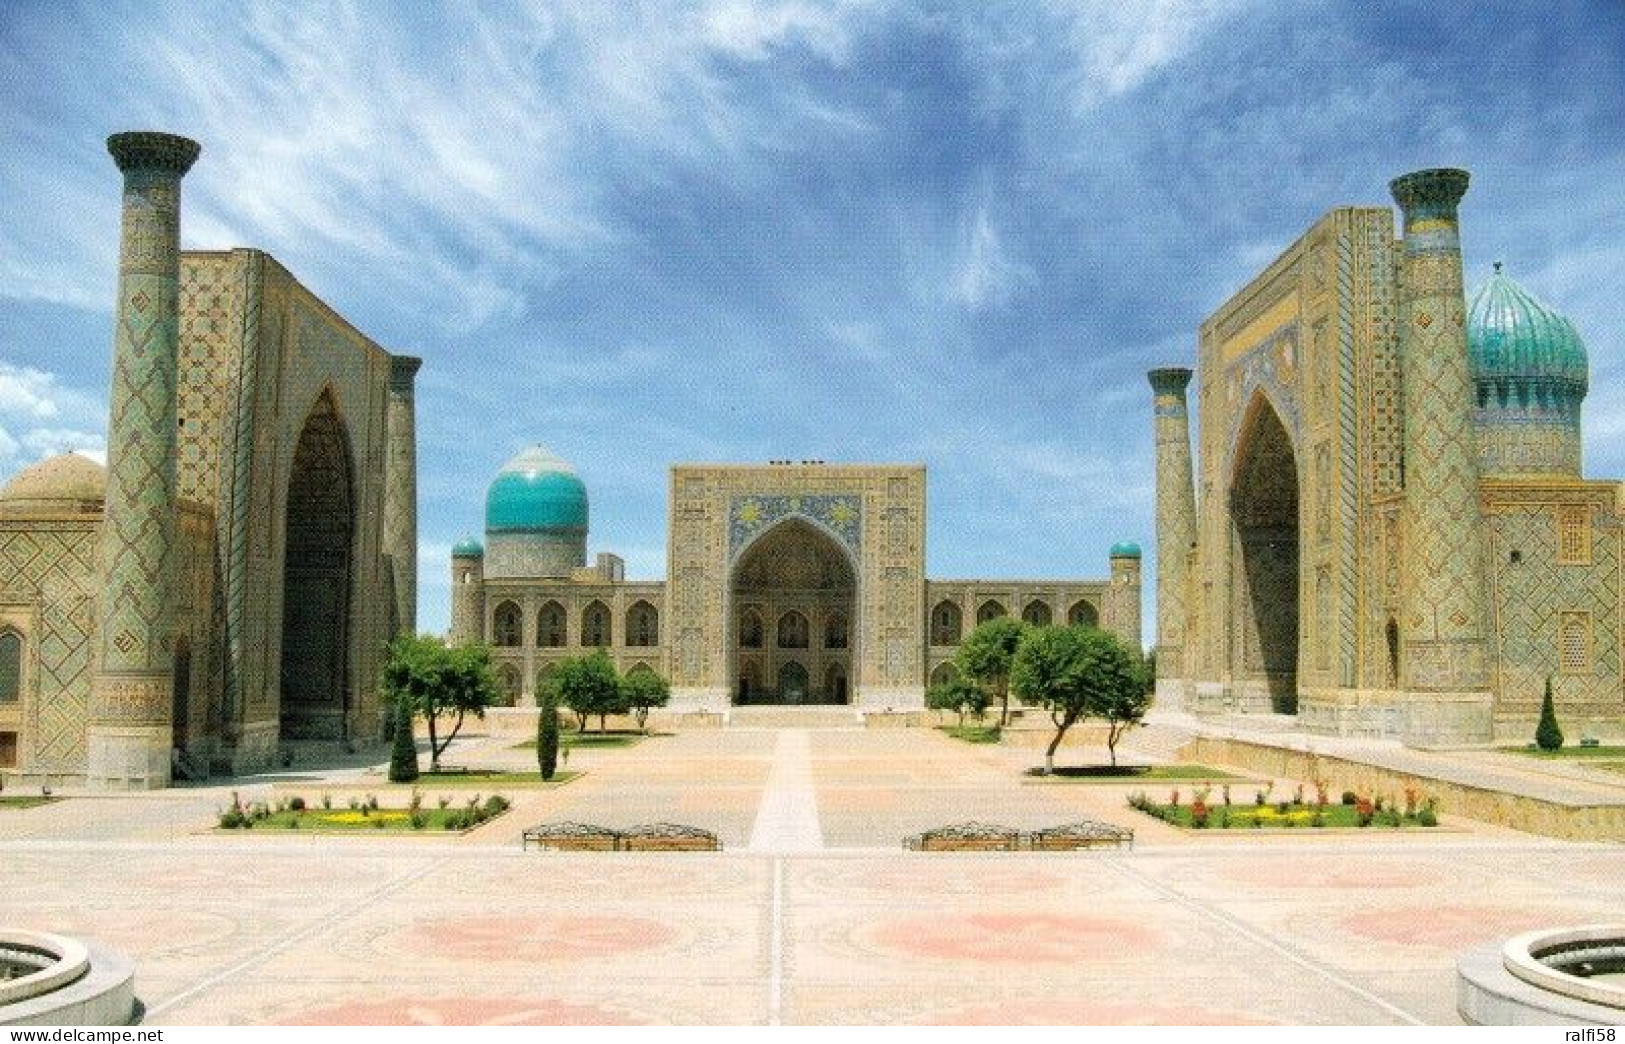 1 AK Usbekistan * Registan Platz In Samarkand - Ulugh-Beg-Madrasa - Sher-Dor-Madrasa - Tilla-Kori-Madrasa - UNESCO Erbe - Uzbekistan